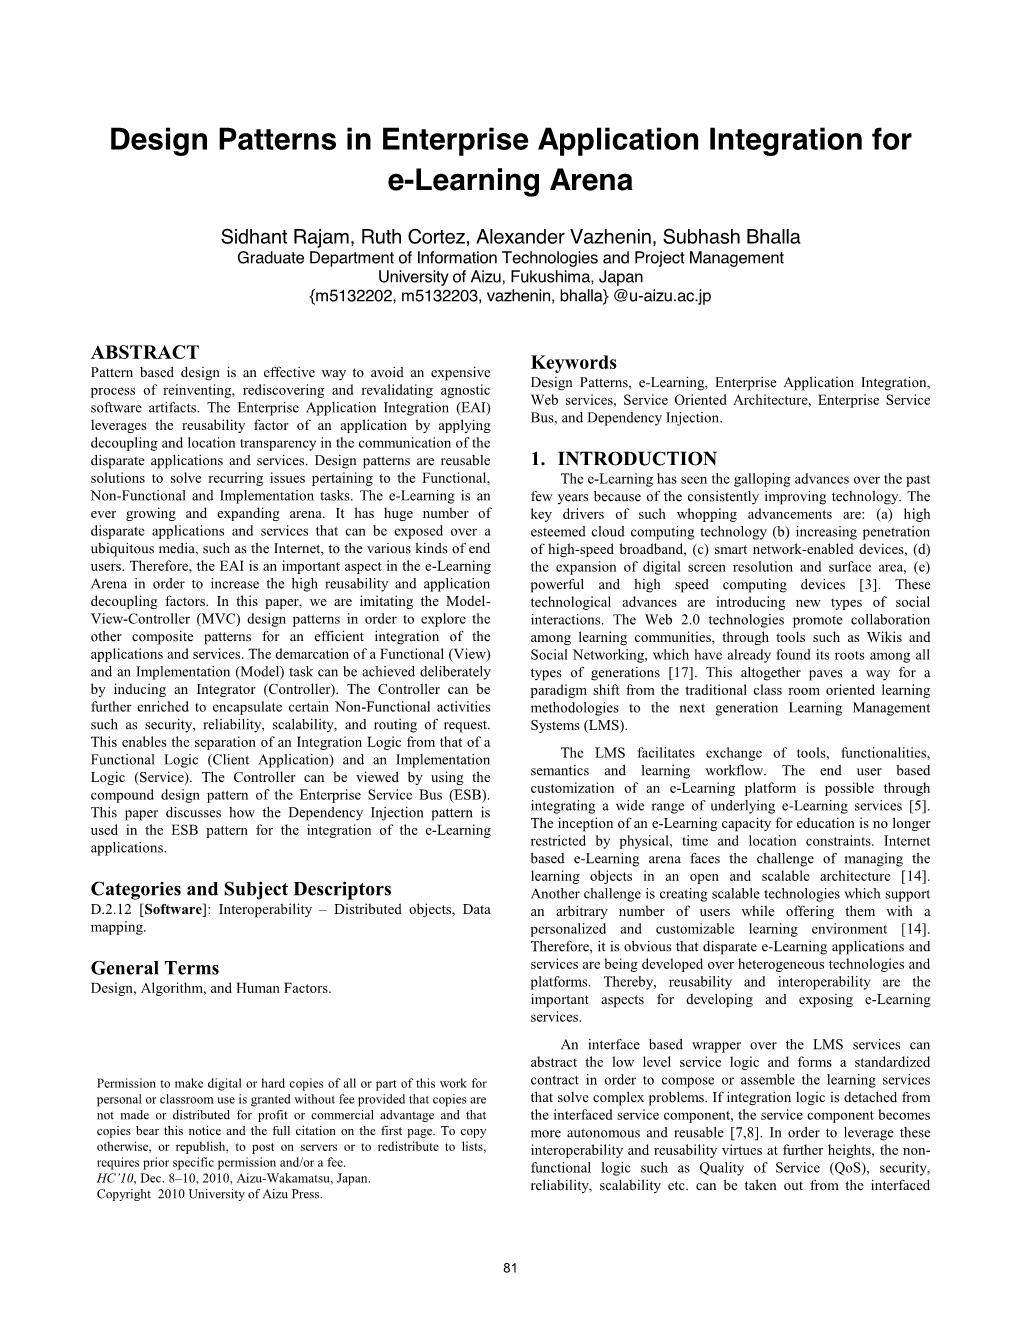 Design Patterns in Enterprise Application Integration for E-Learning Arena